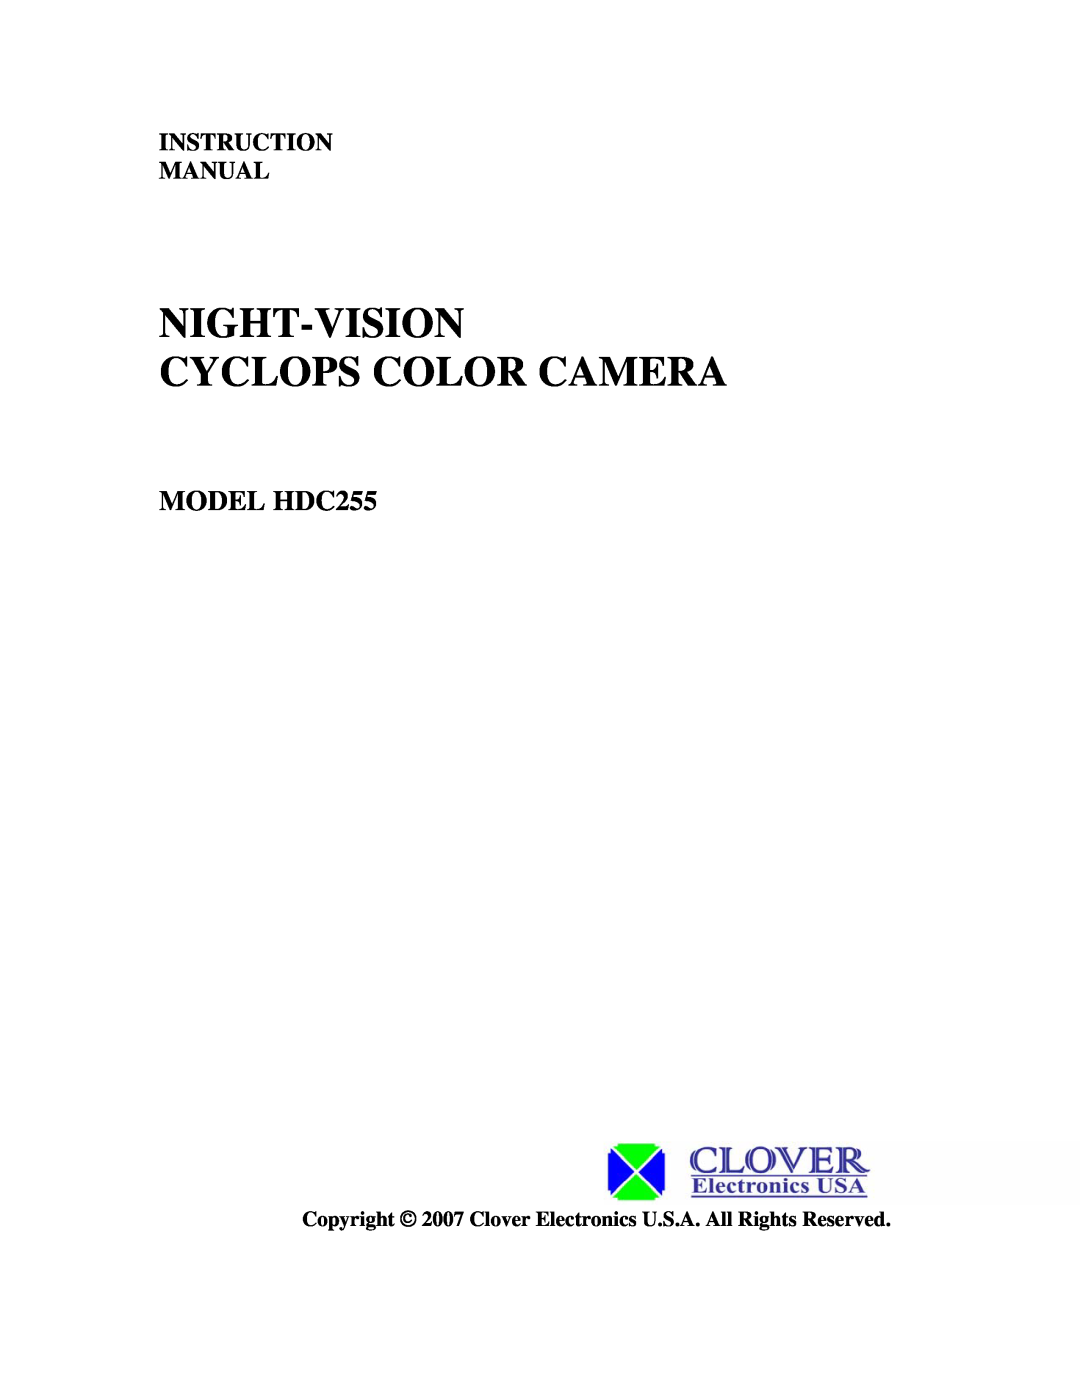 Clover Electronics instruction manual MODEL HDC255, Instruction Manual, Night-Vision Cyclops Color Camera 